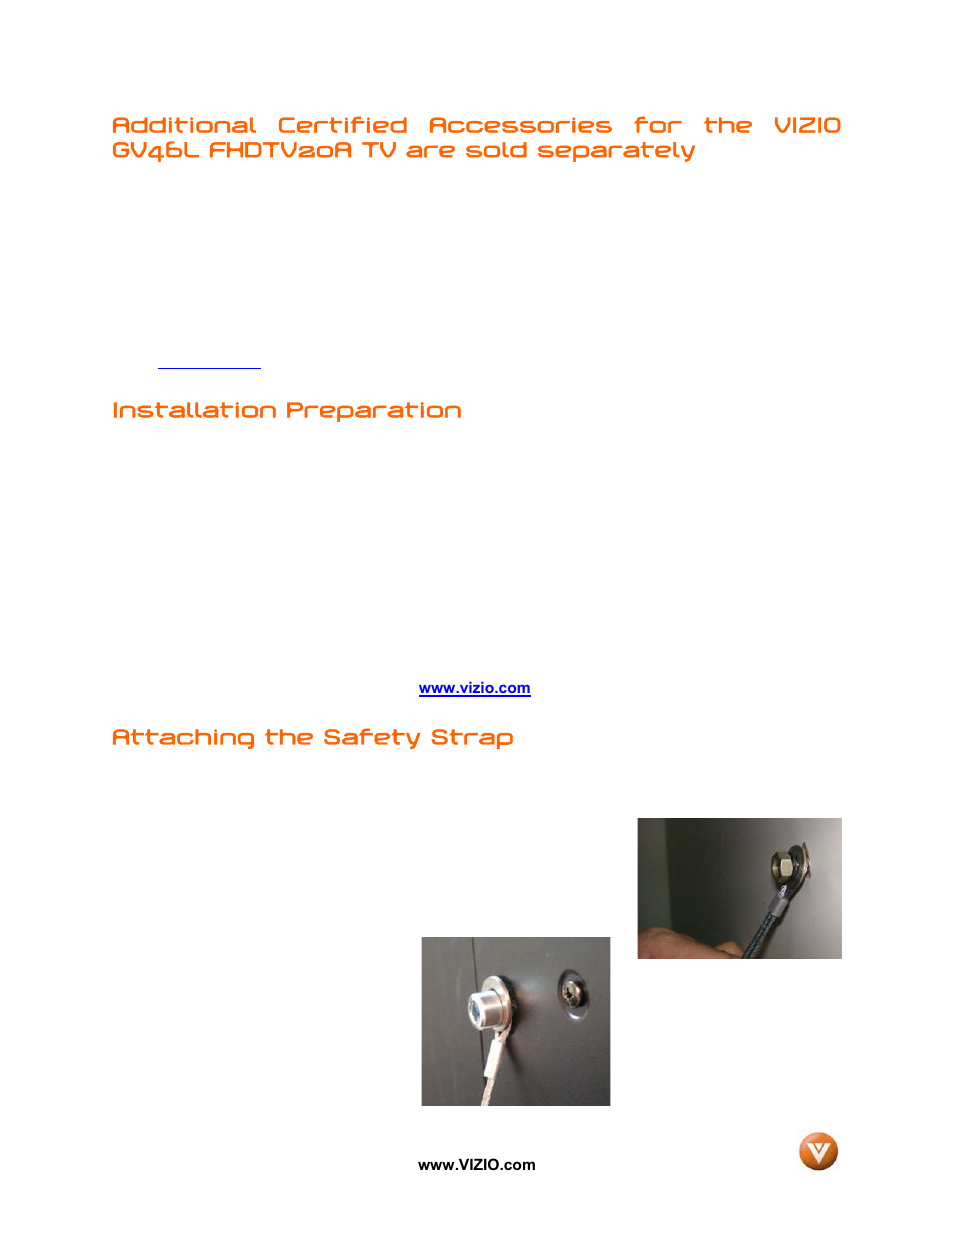 Installation preparation, Attaching the safety strap | Vizio GV46L FHDTV20A User Manual | Page 5 / 85